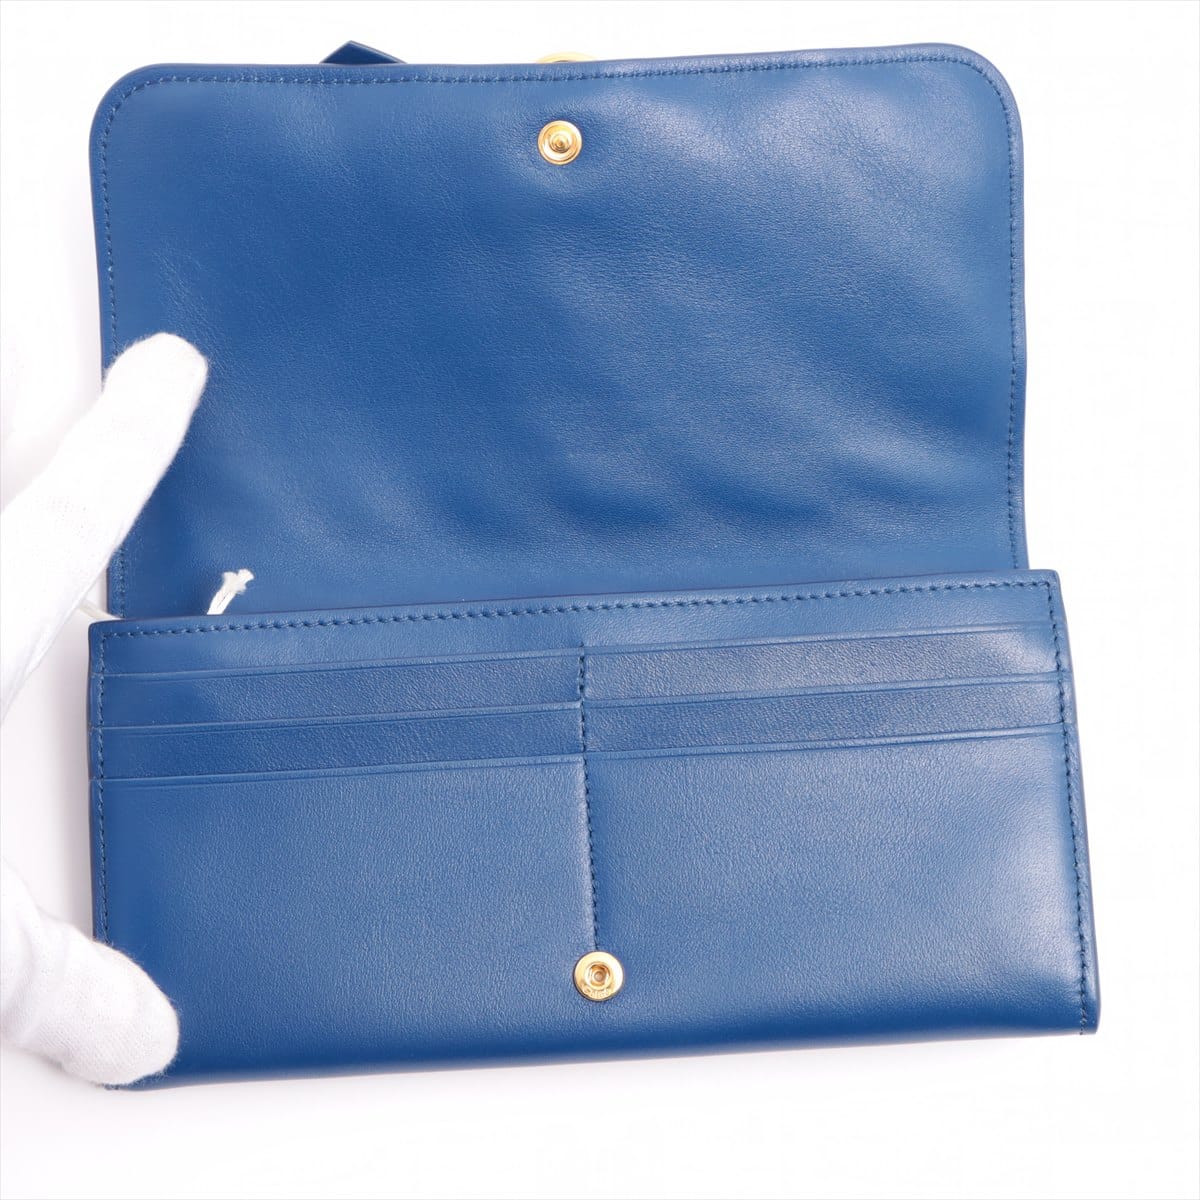 Chloe Leather Wallet Navy blue